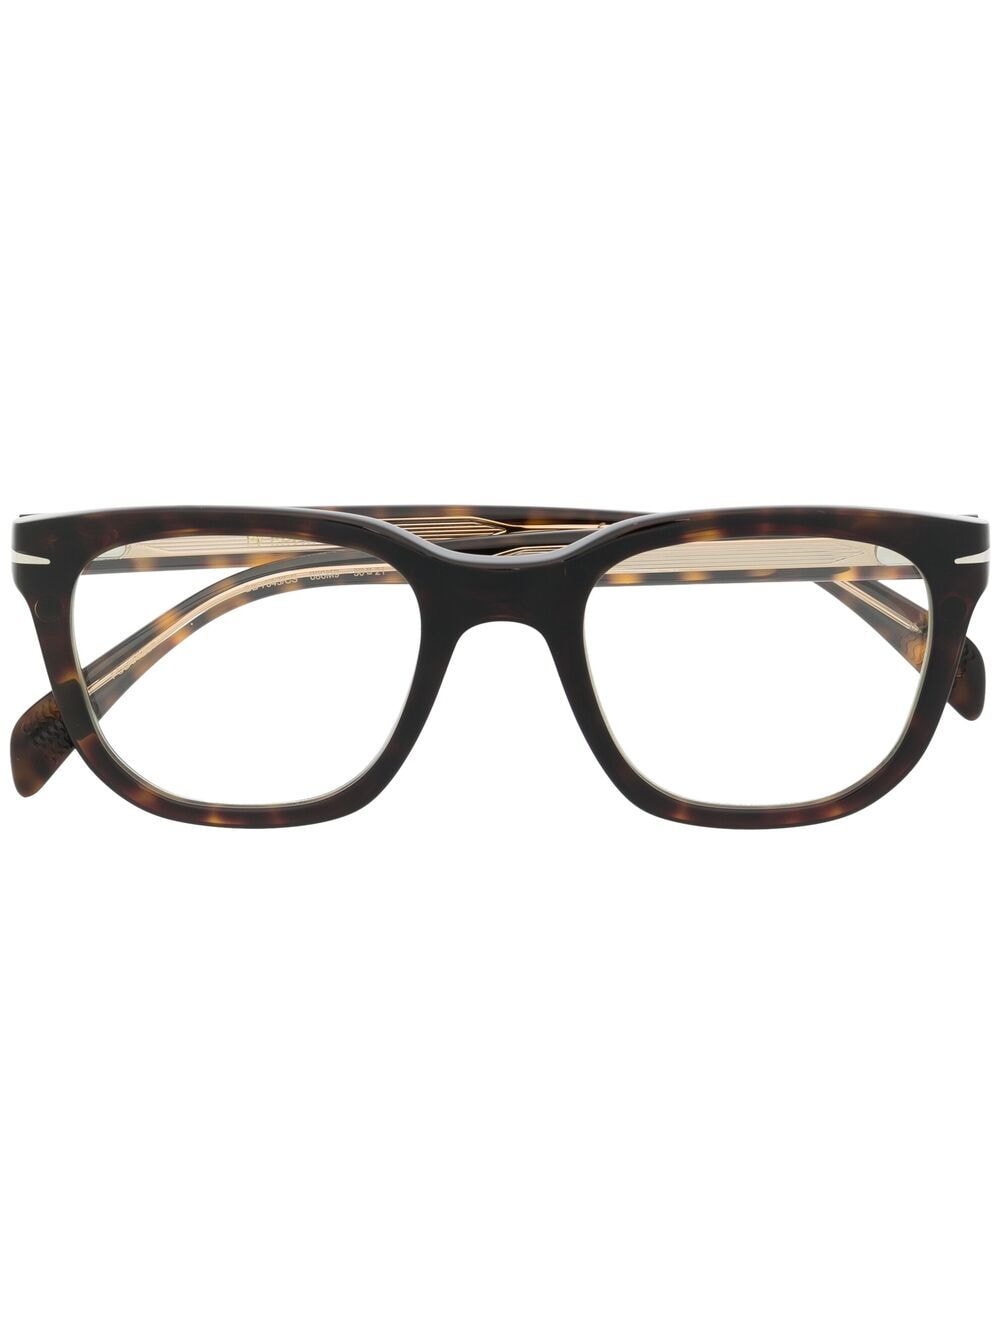 Image 1 of Eyewear by David Beckham tortoiseshell clip-on lens glasses